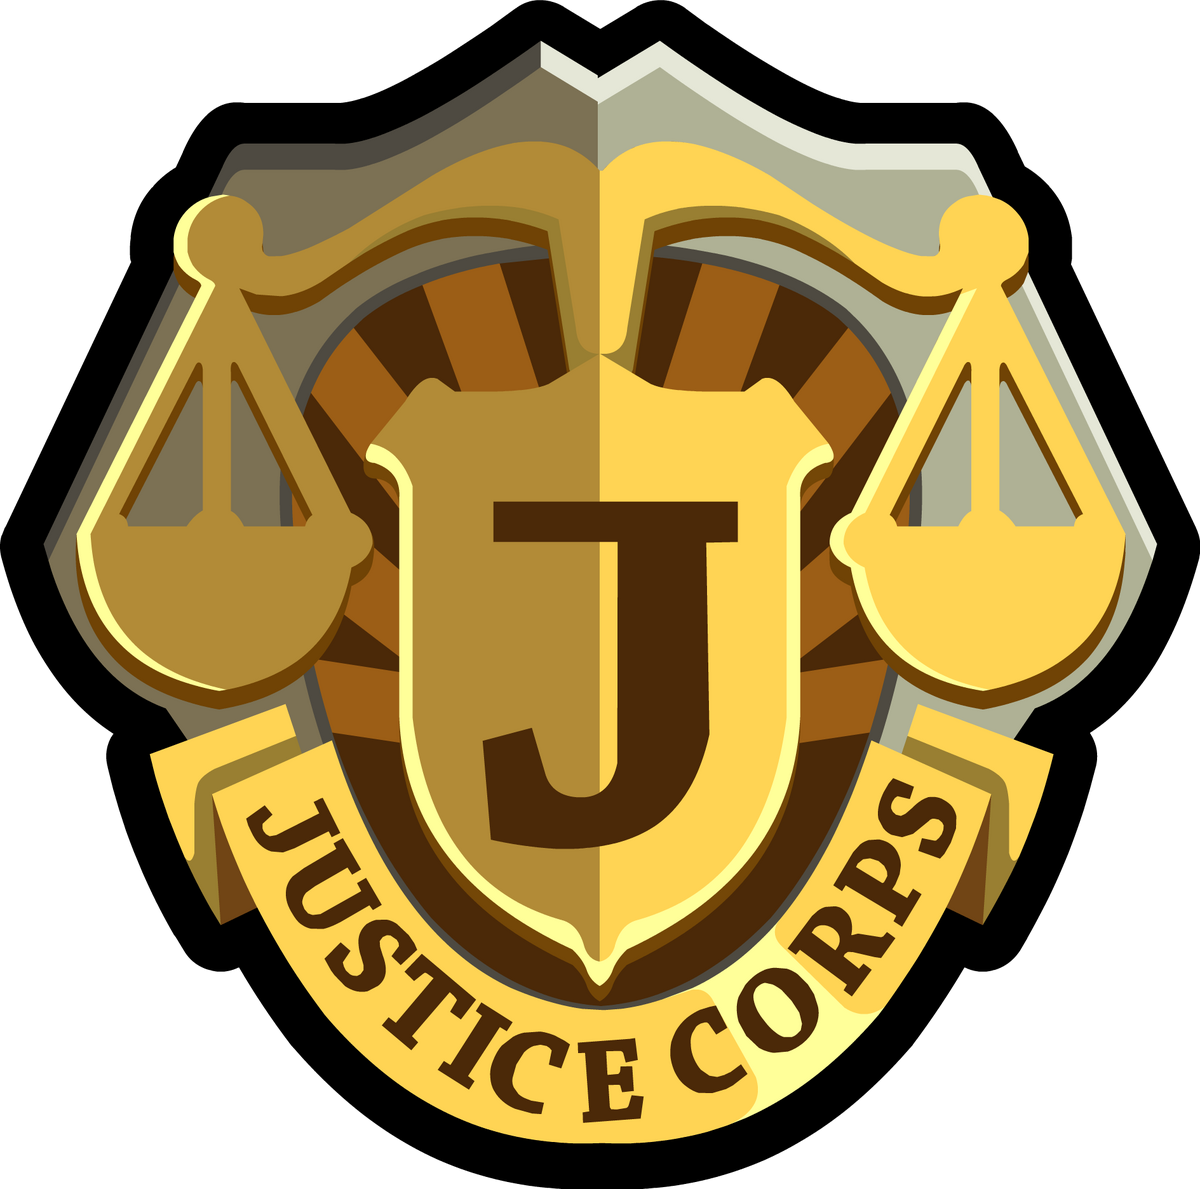 Justice case